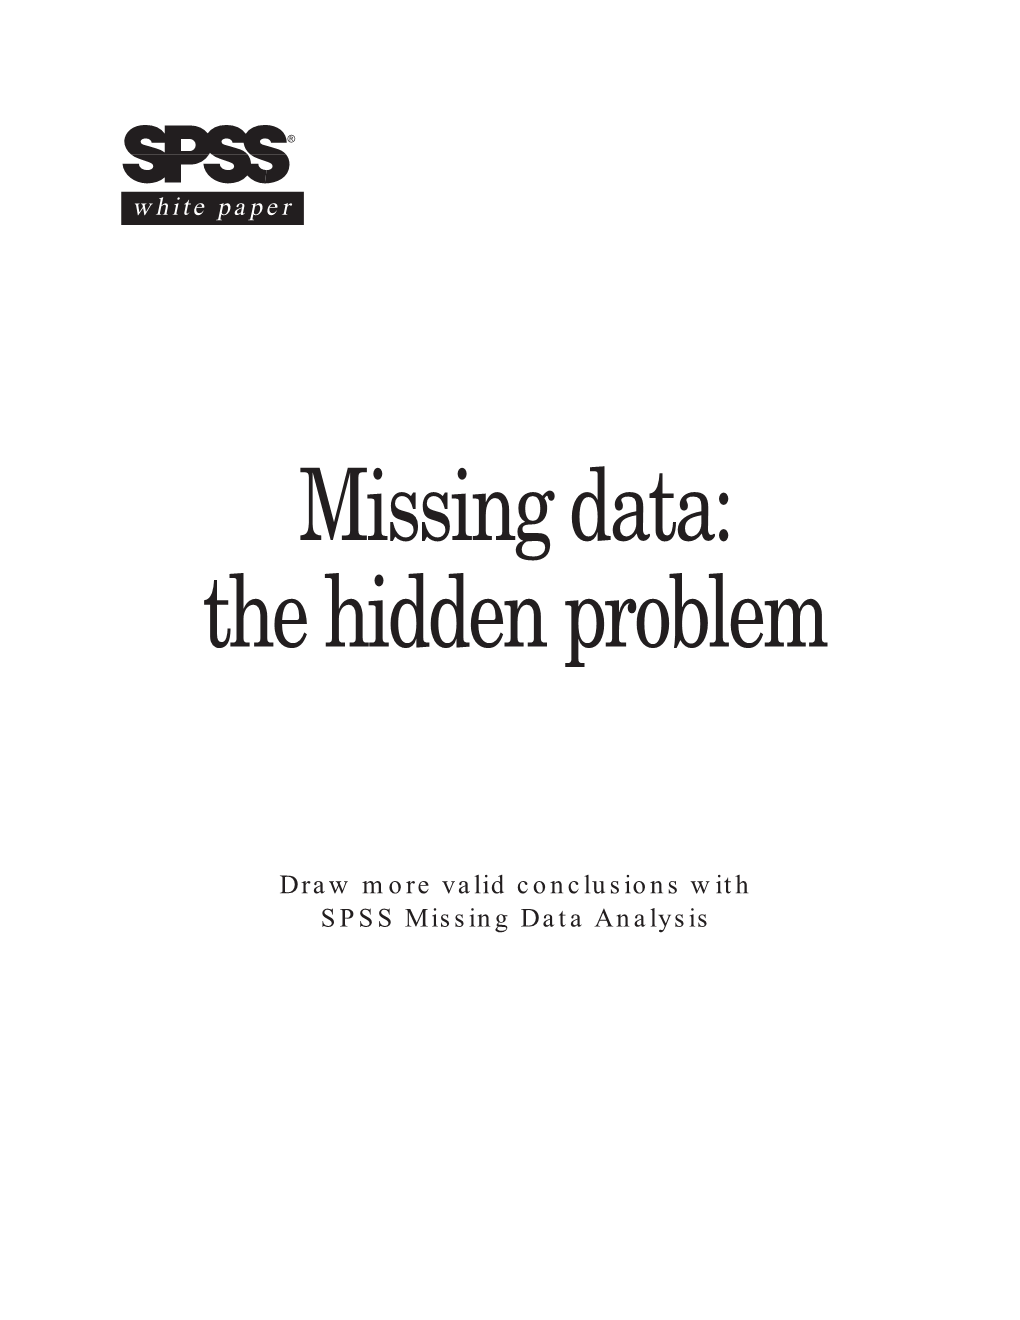 Missing Data: the Hidden Problem